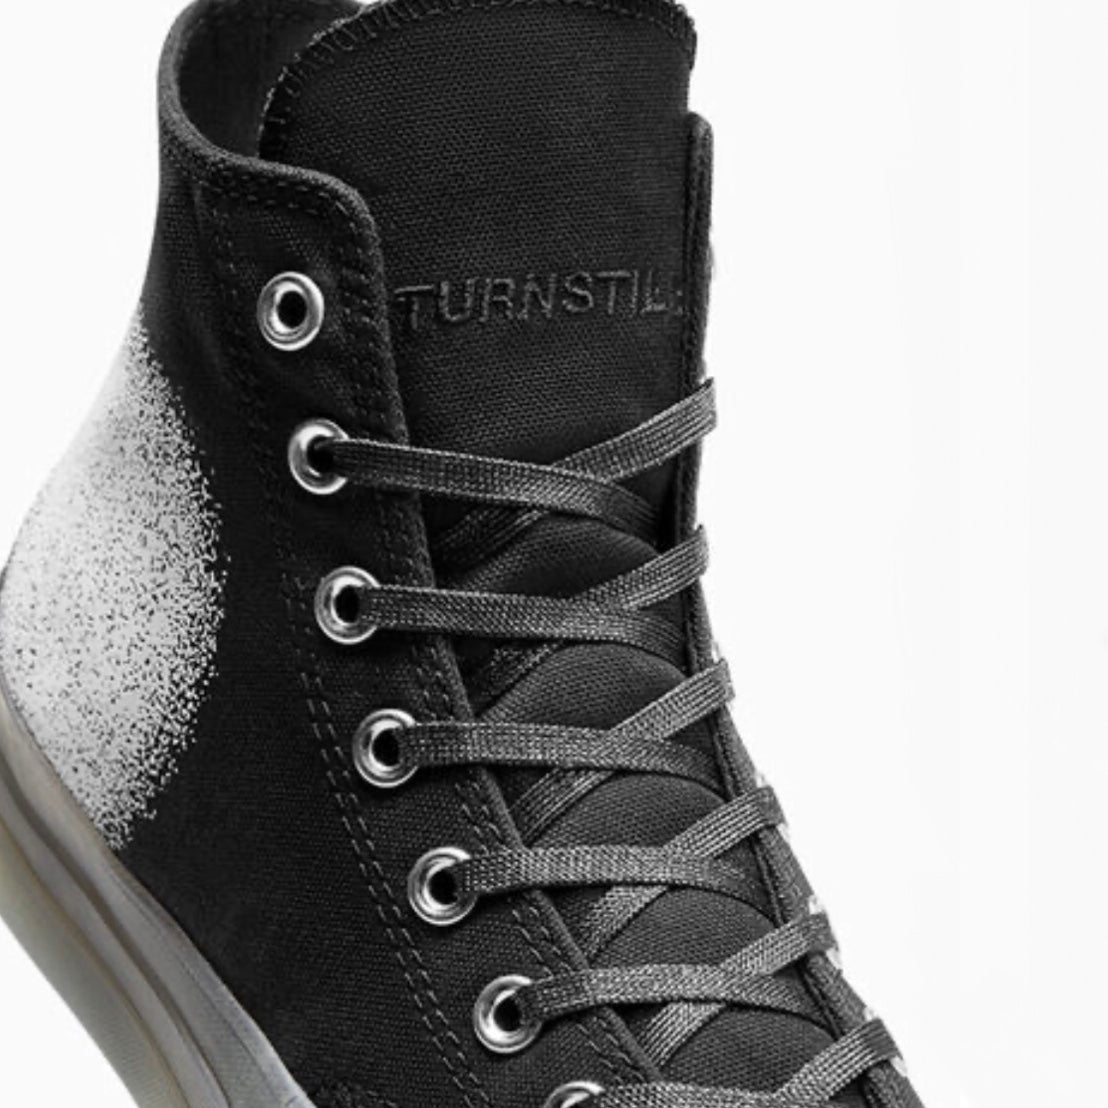 Converse TURNSTILE Chuck 70 Hi - Black / Grey / White